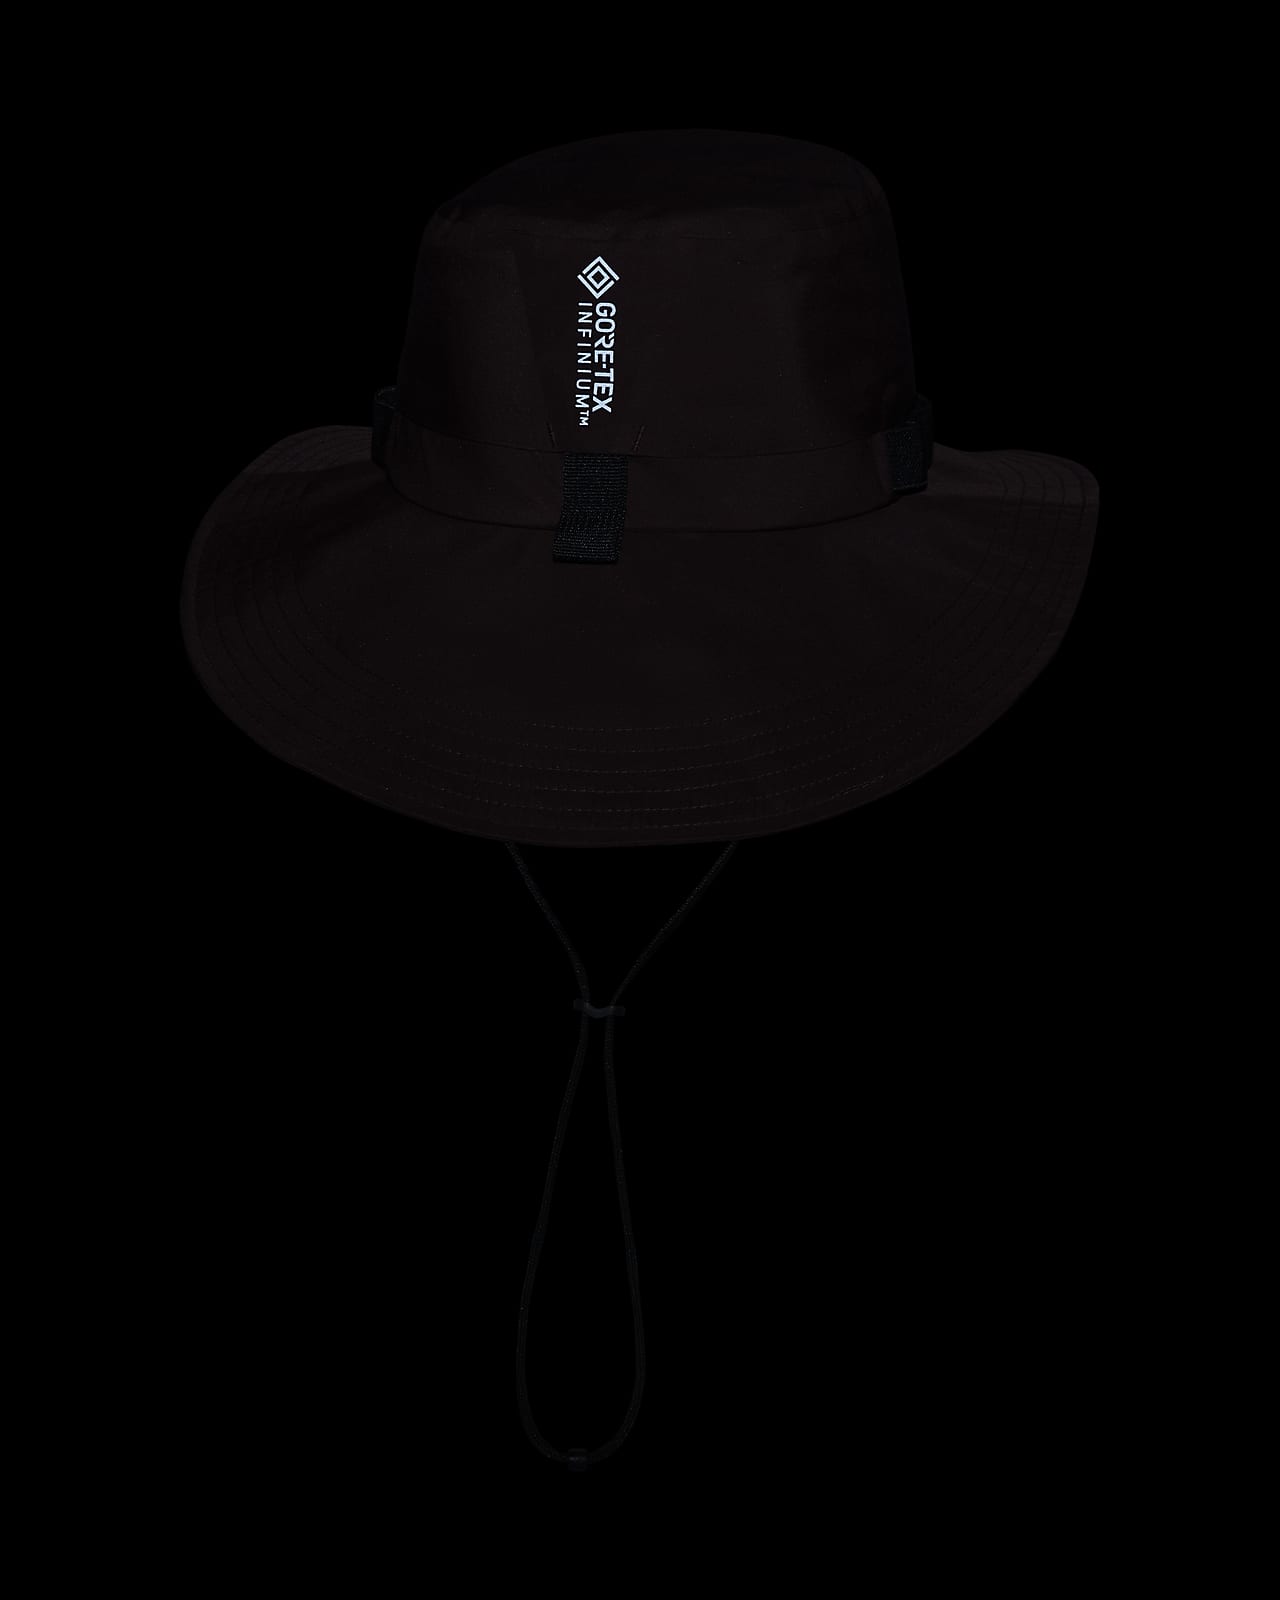 Nike Apex ACG Bucket Hat